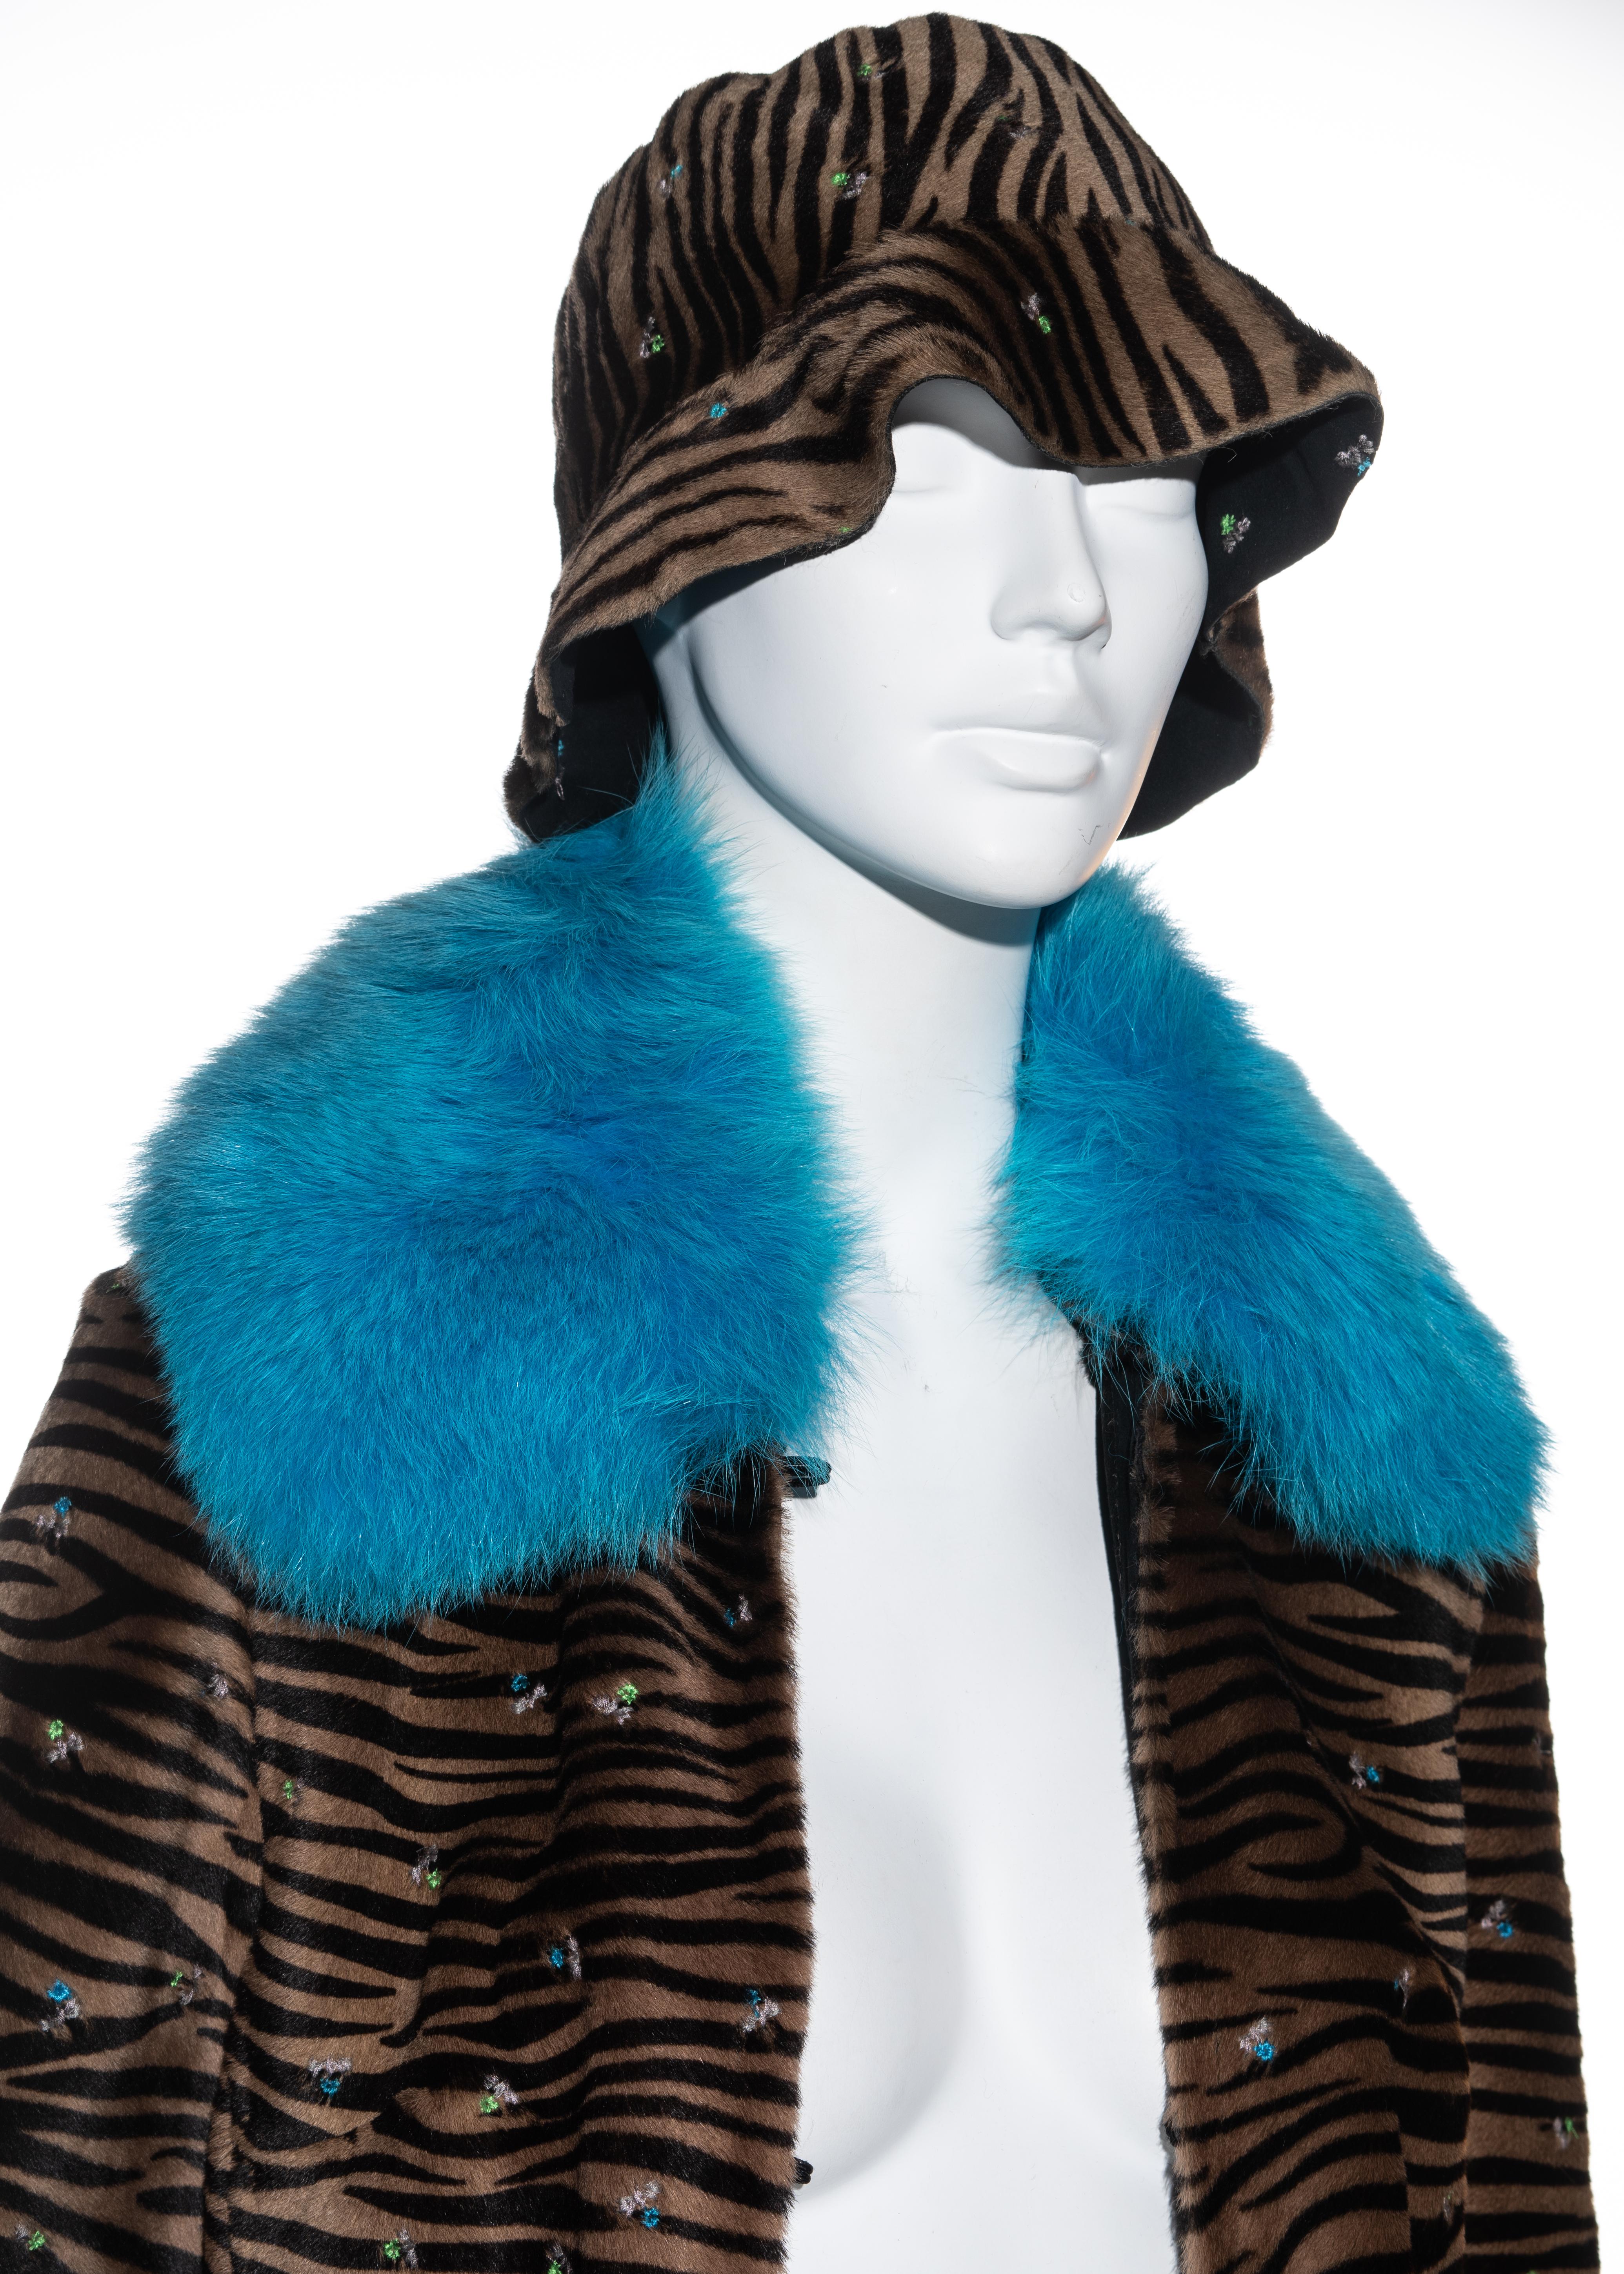 Black Gianni Versace zebra print pony hair coat with fox fur and bucket hat, fw 1999